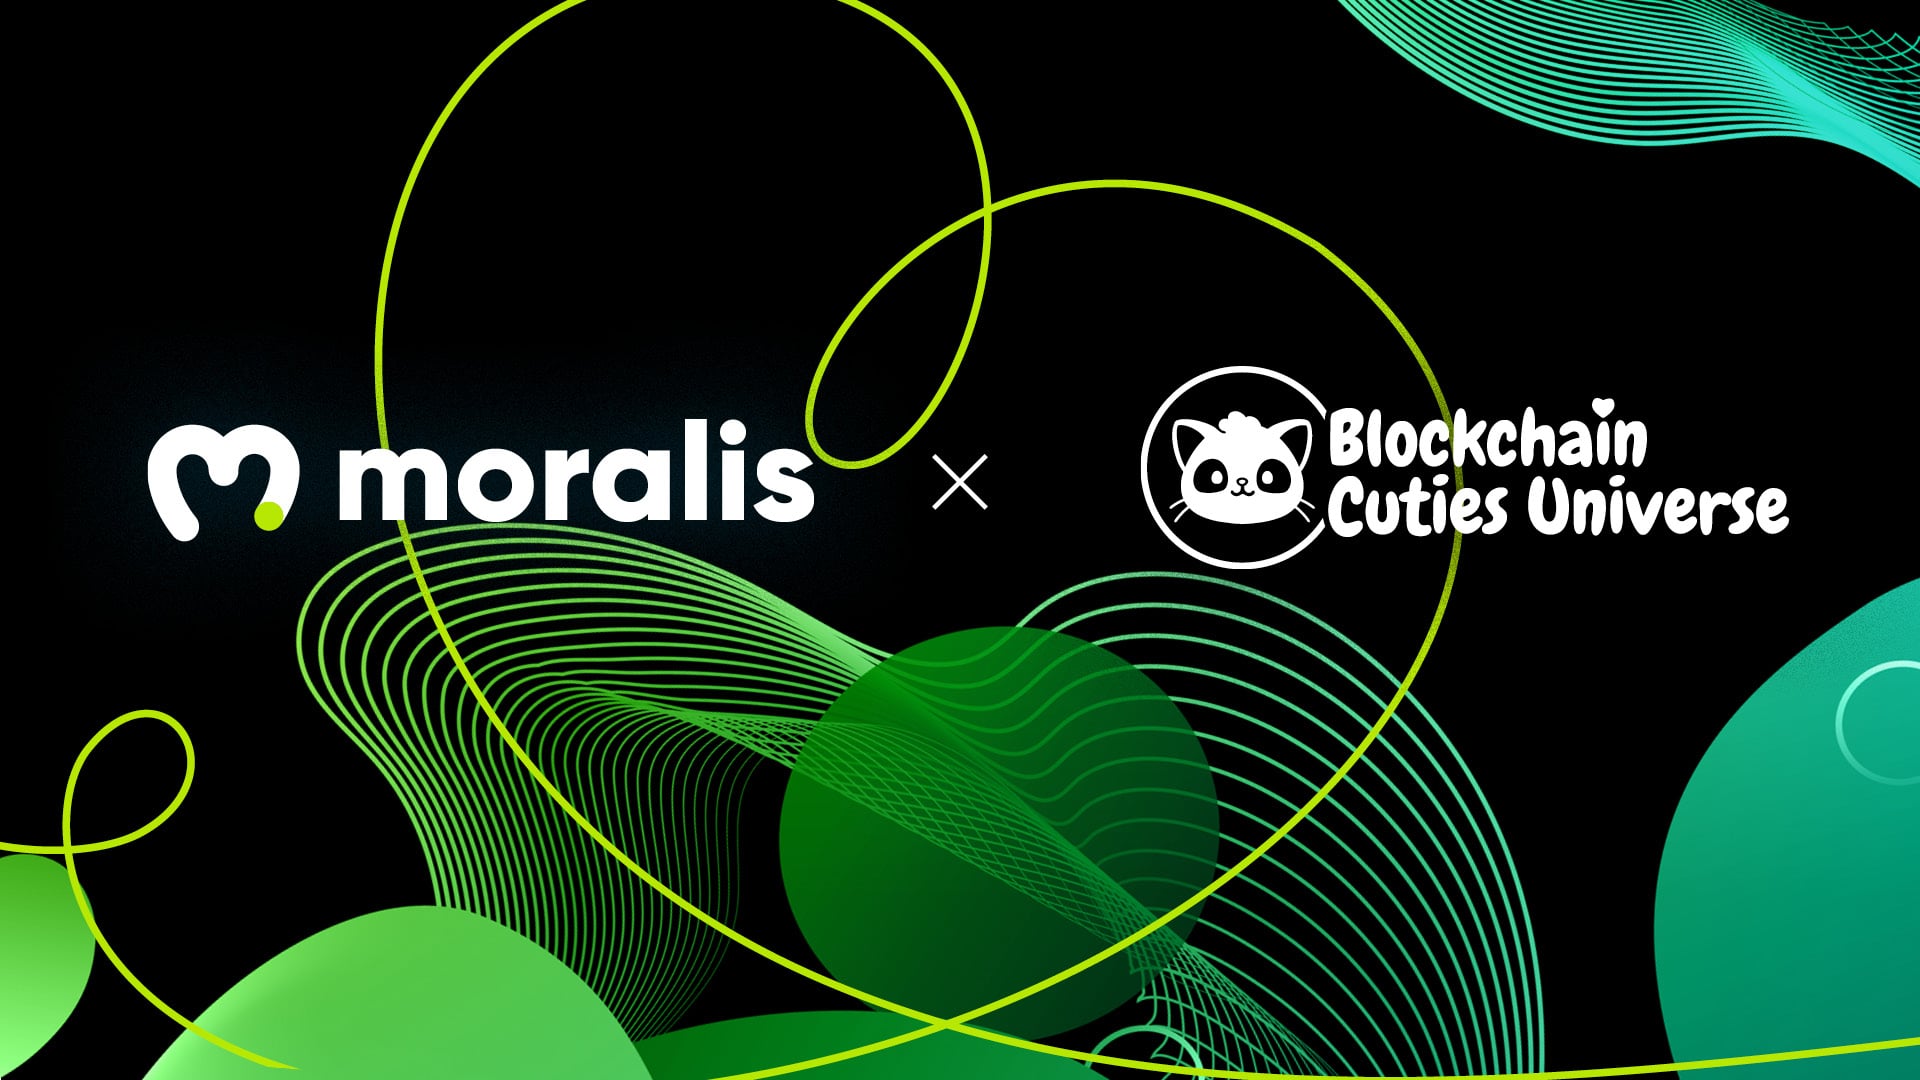 Moralis Partners with Blockchain Cuties Universe for 2021 Moralis Hackathon » Moralis - The Ultimate Web3 Development Platform